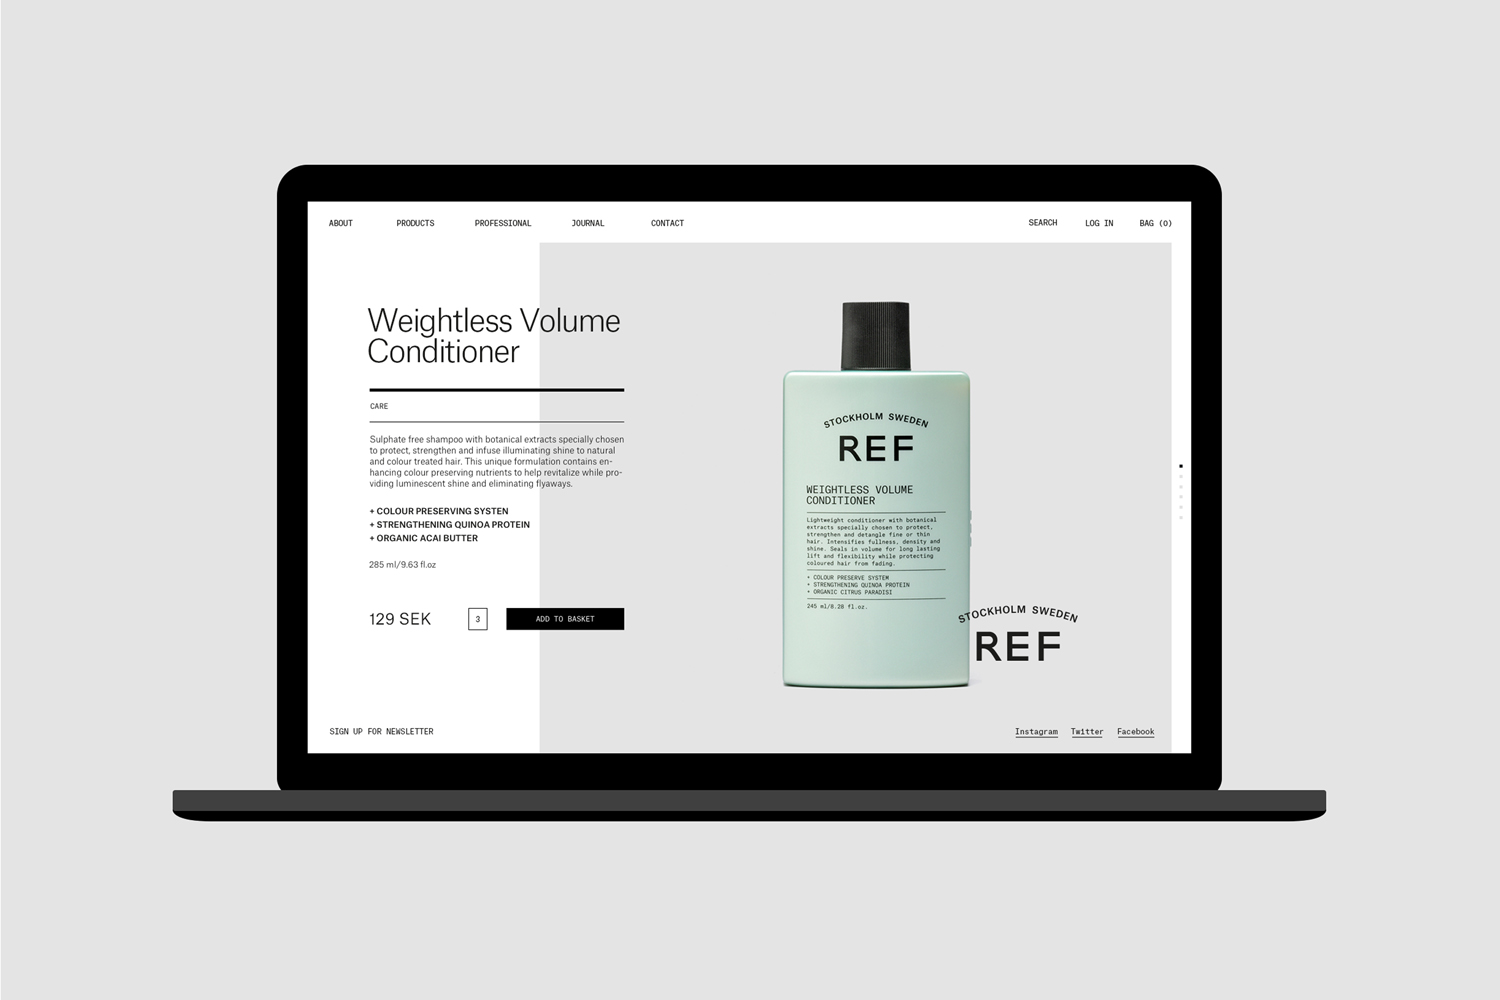 Visual identity and website by Scandinavian studio Kurppa Hosk for Swedish hair care brand REF